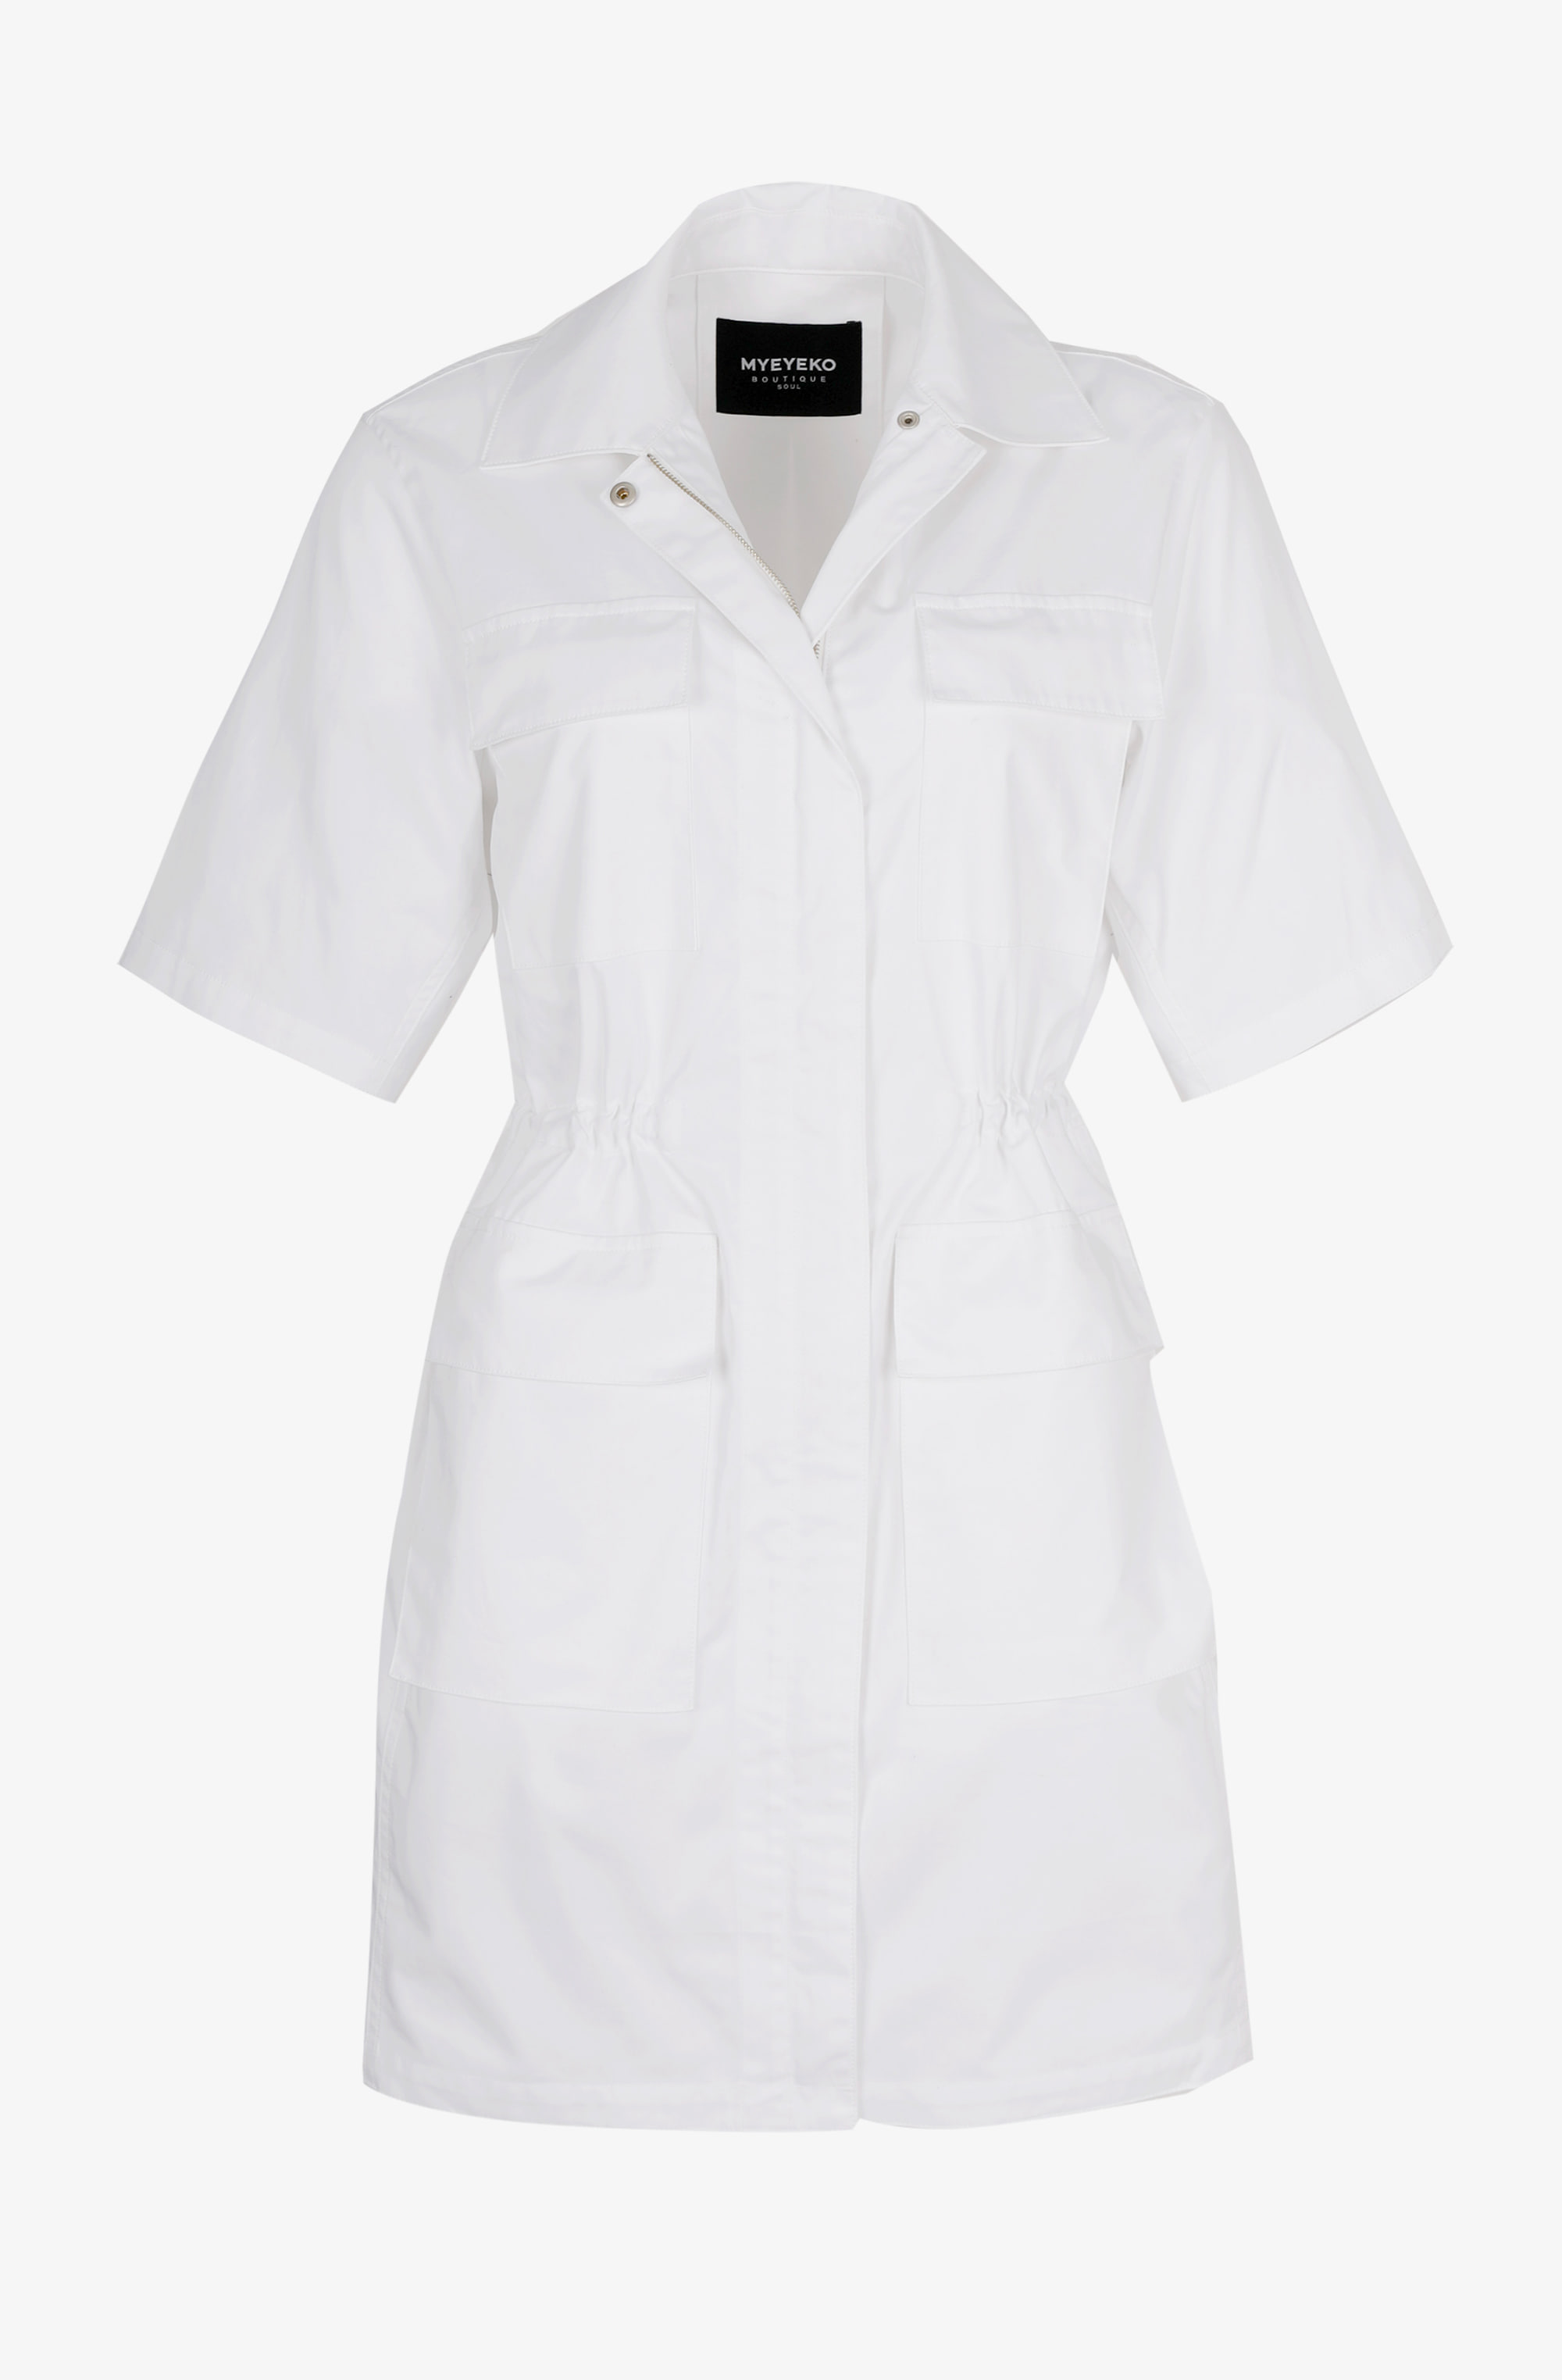 HIGH QUALITY LINE - MYEYEKO 22 SUMMER Cotton String Dress (WHITE)